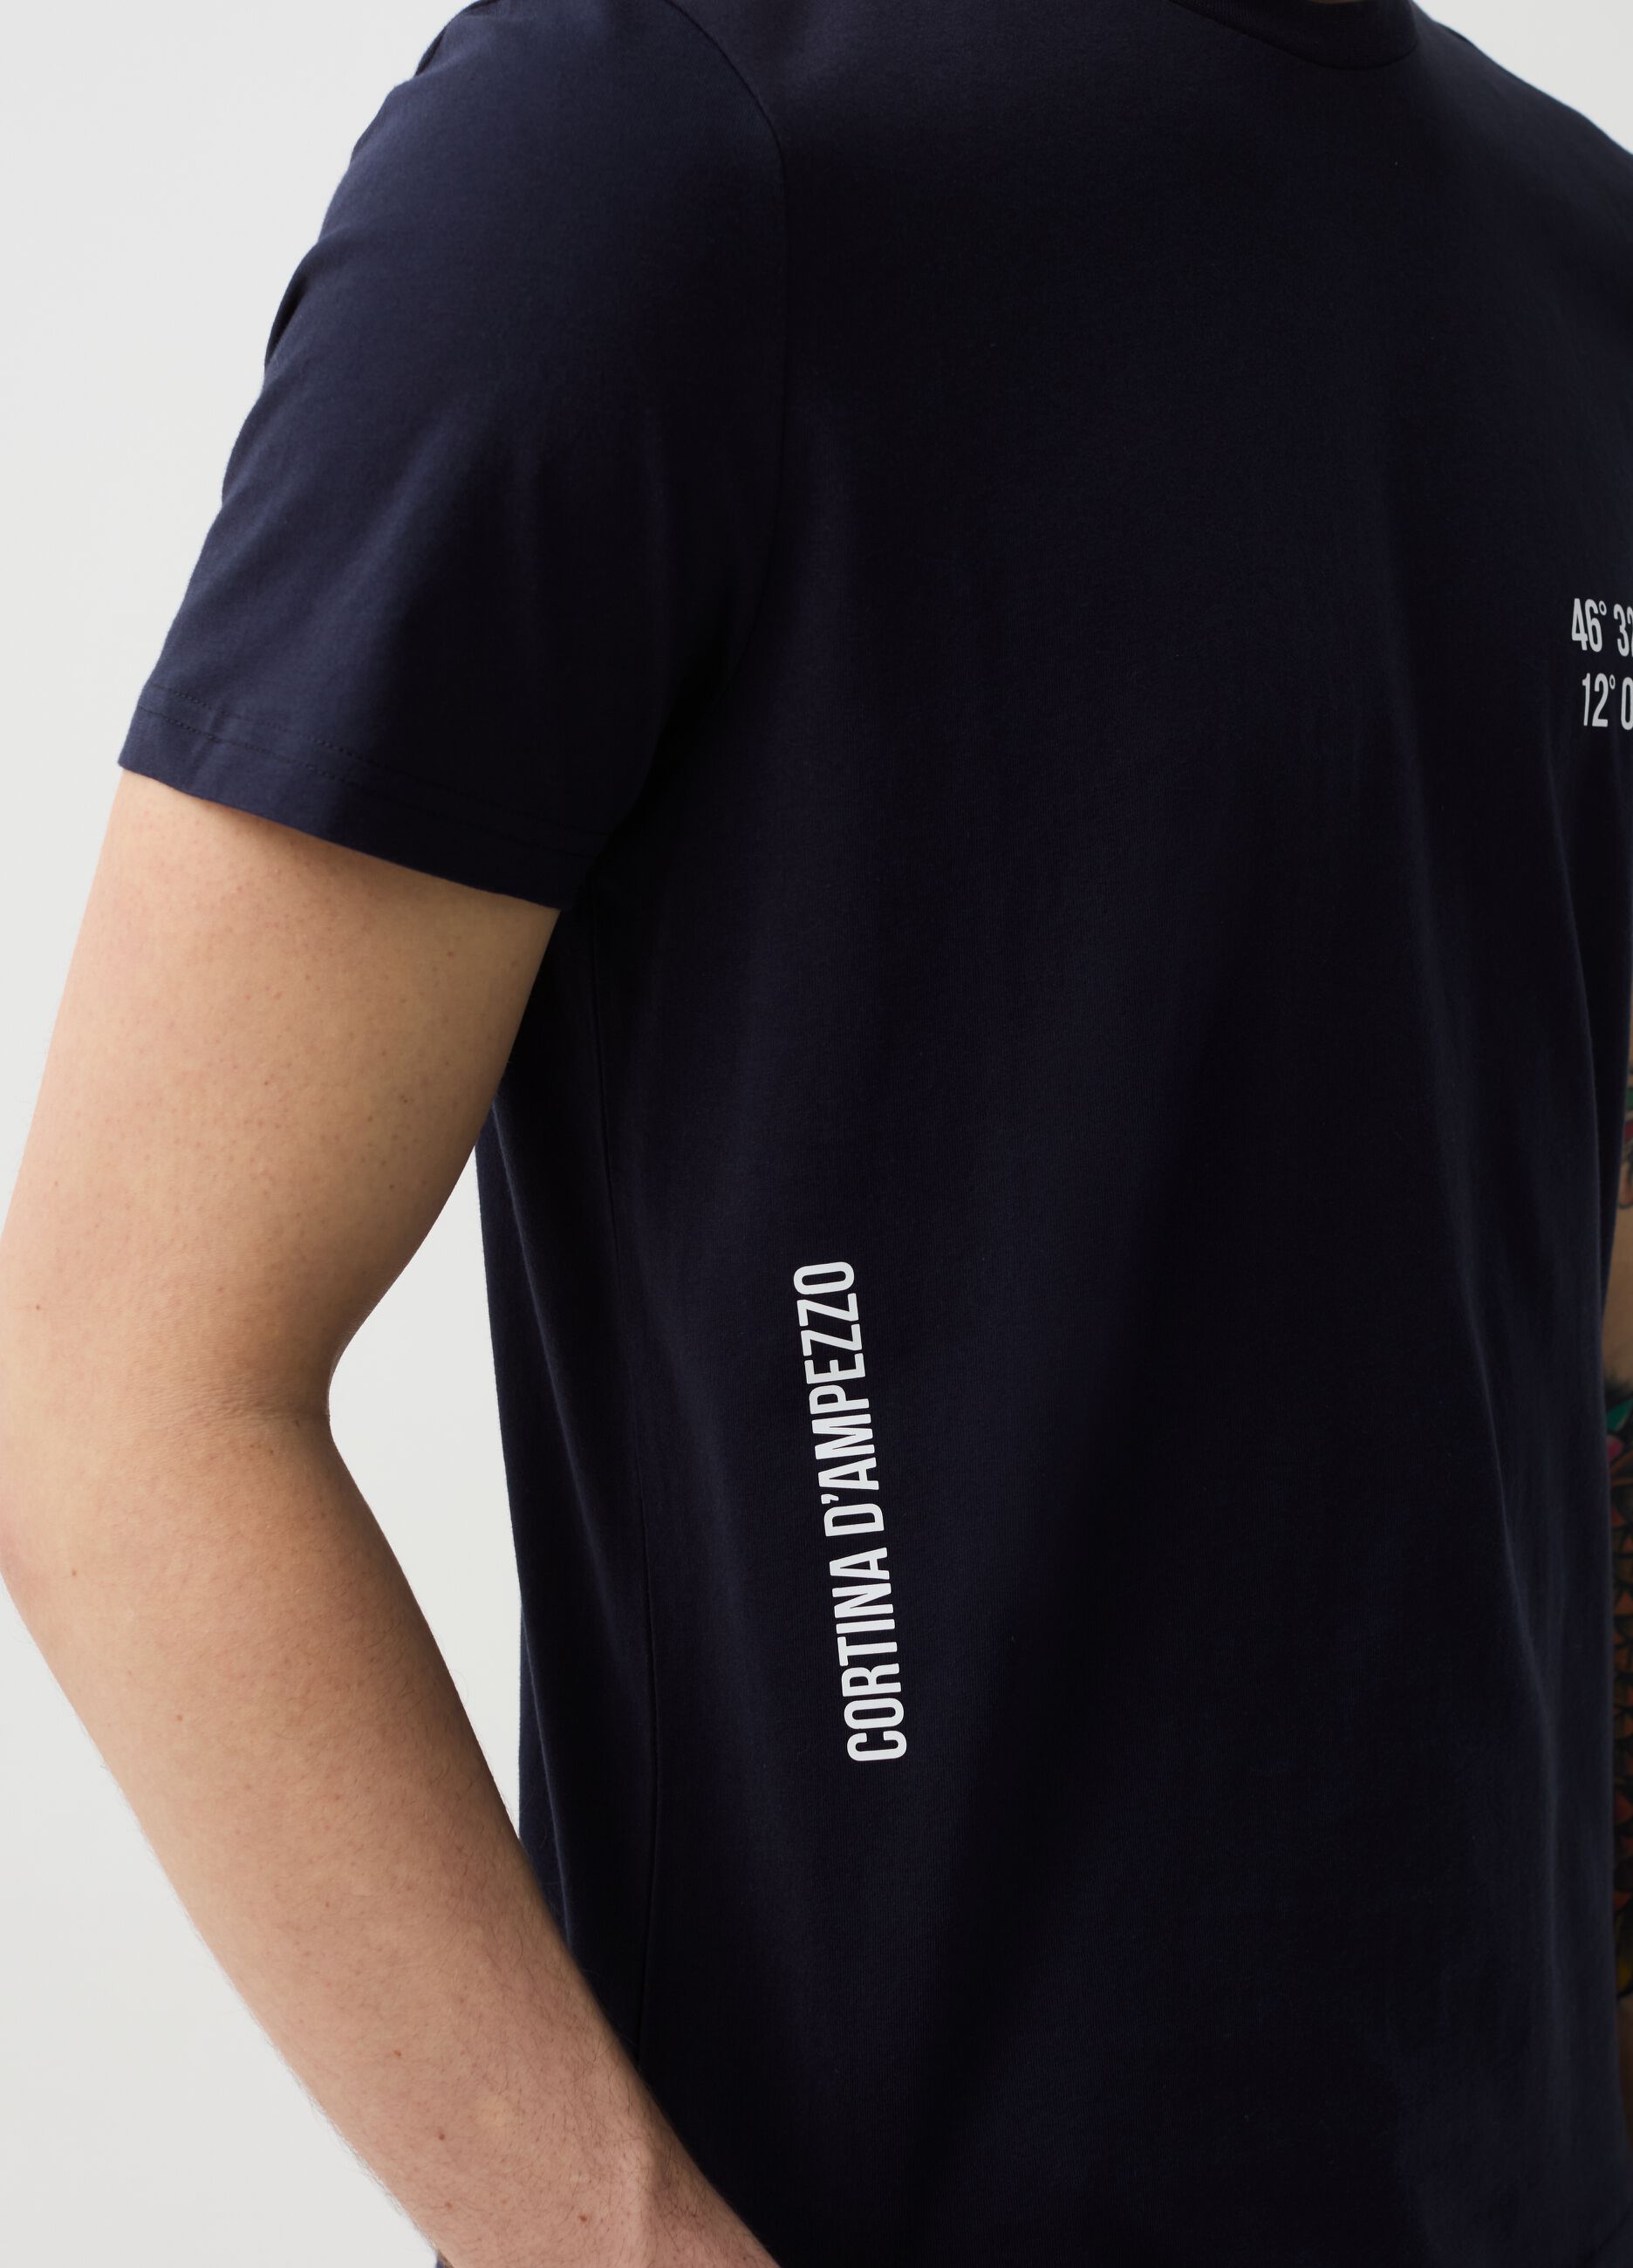 T-shirt with Cortina d'Ampezzo Corso Italia print